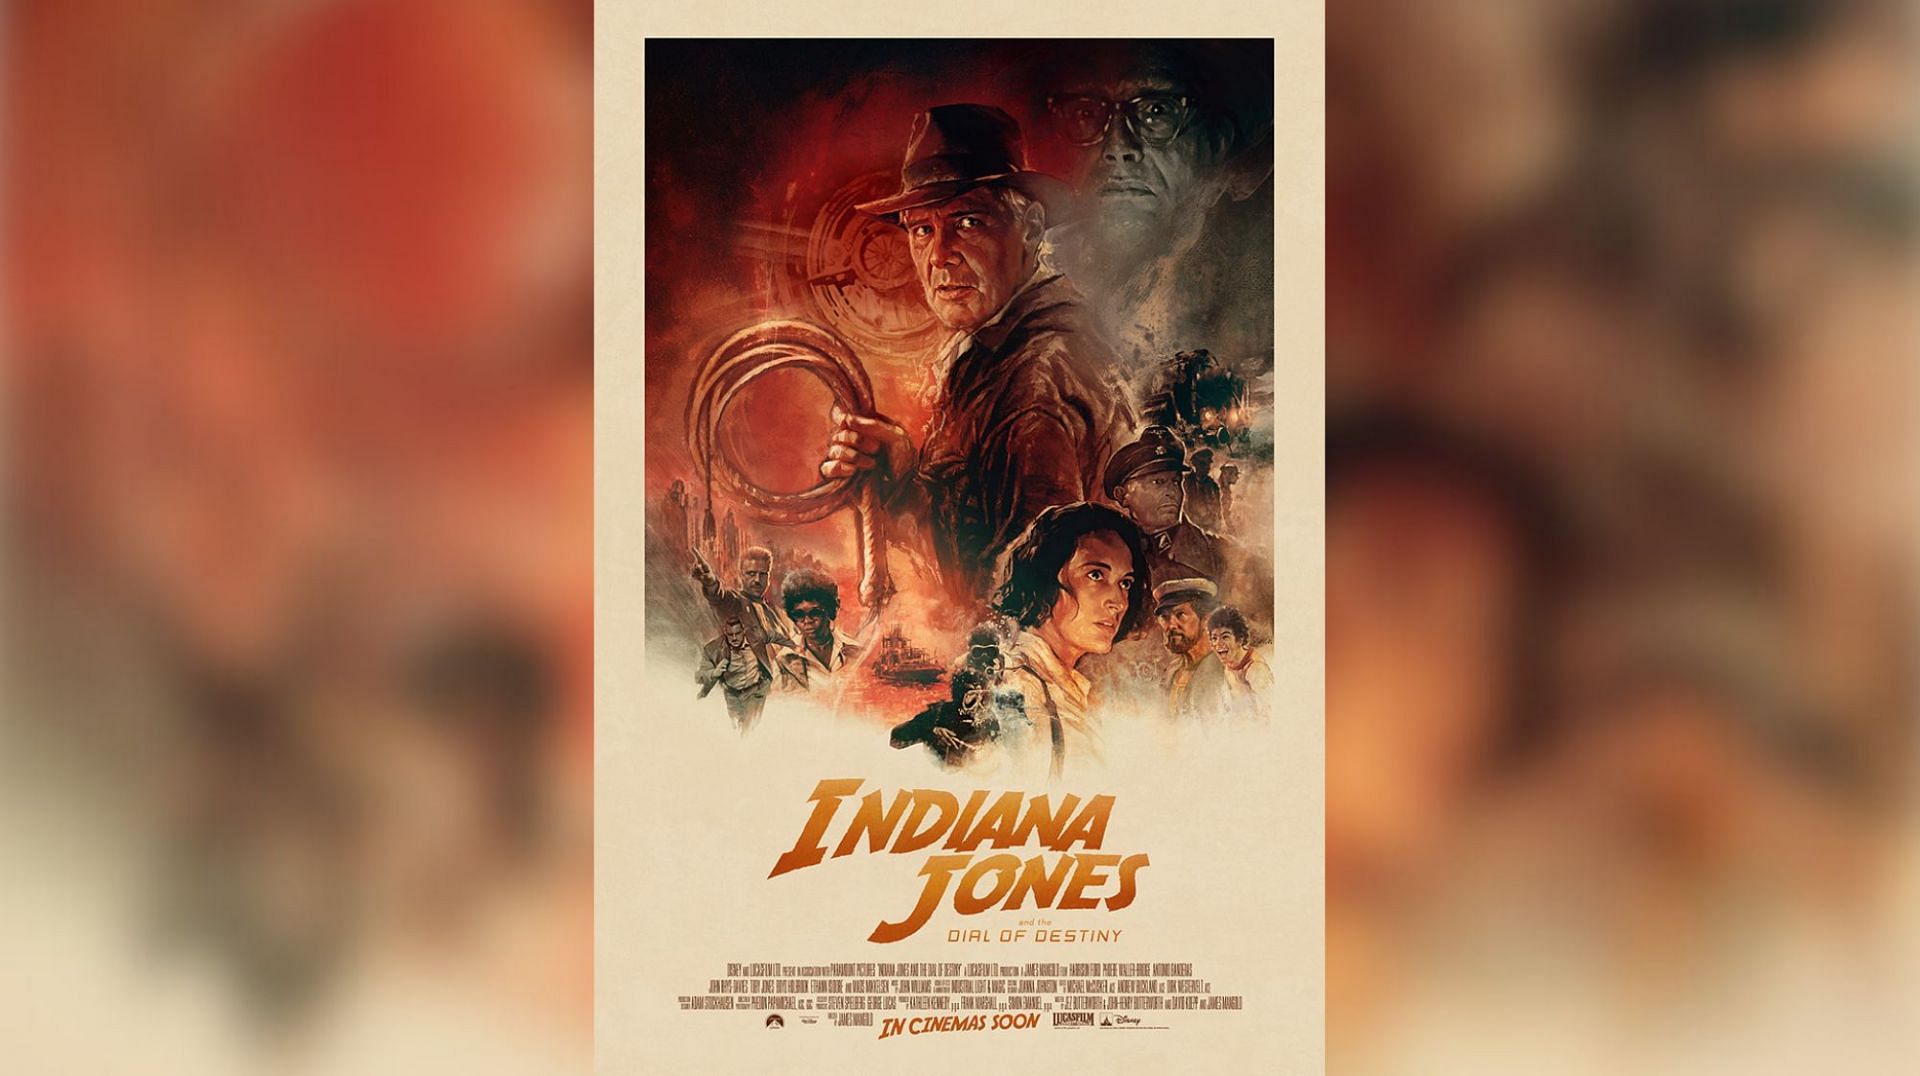 Indiana Jones and the Dial of Destiny (Image via Lucasfilms)